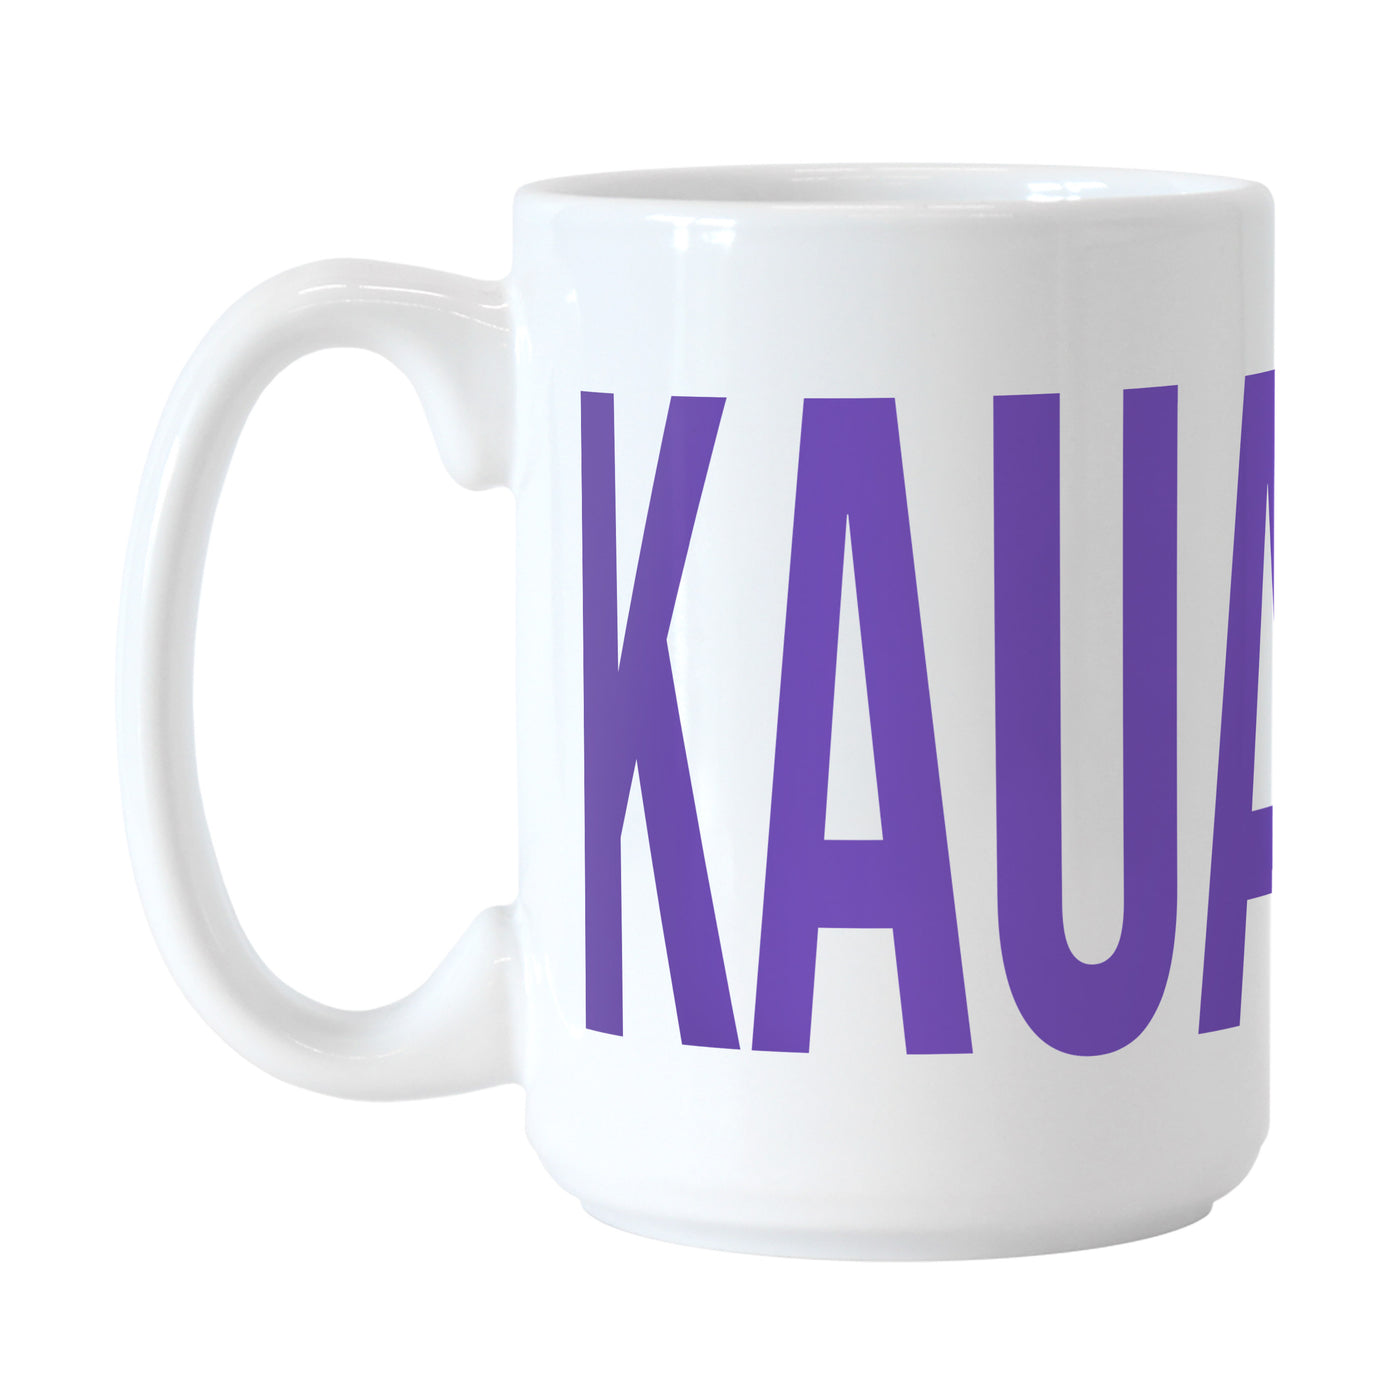 University of Hawaii - Kaua'i 15oz Overtime Sublimated Mug